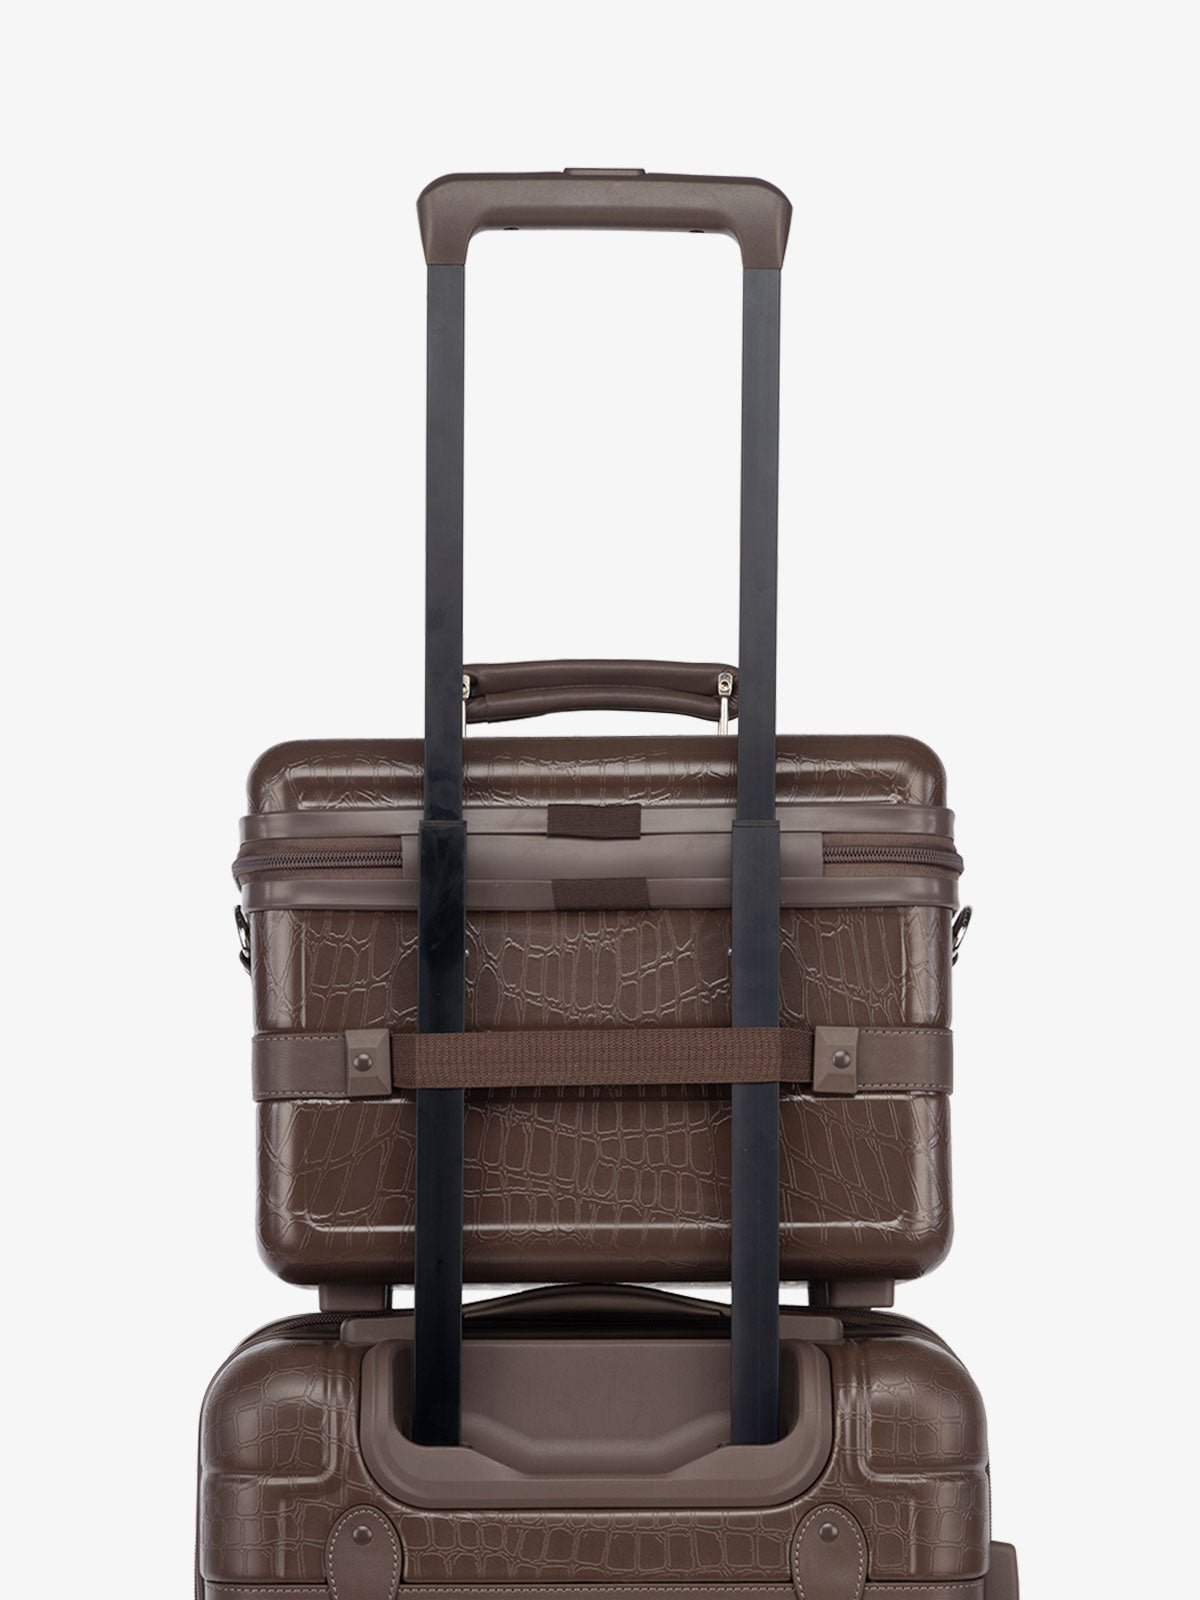 CALPAK TRNK make up vanity case with top handle and luggage sleeve in espresso brown